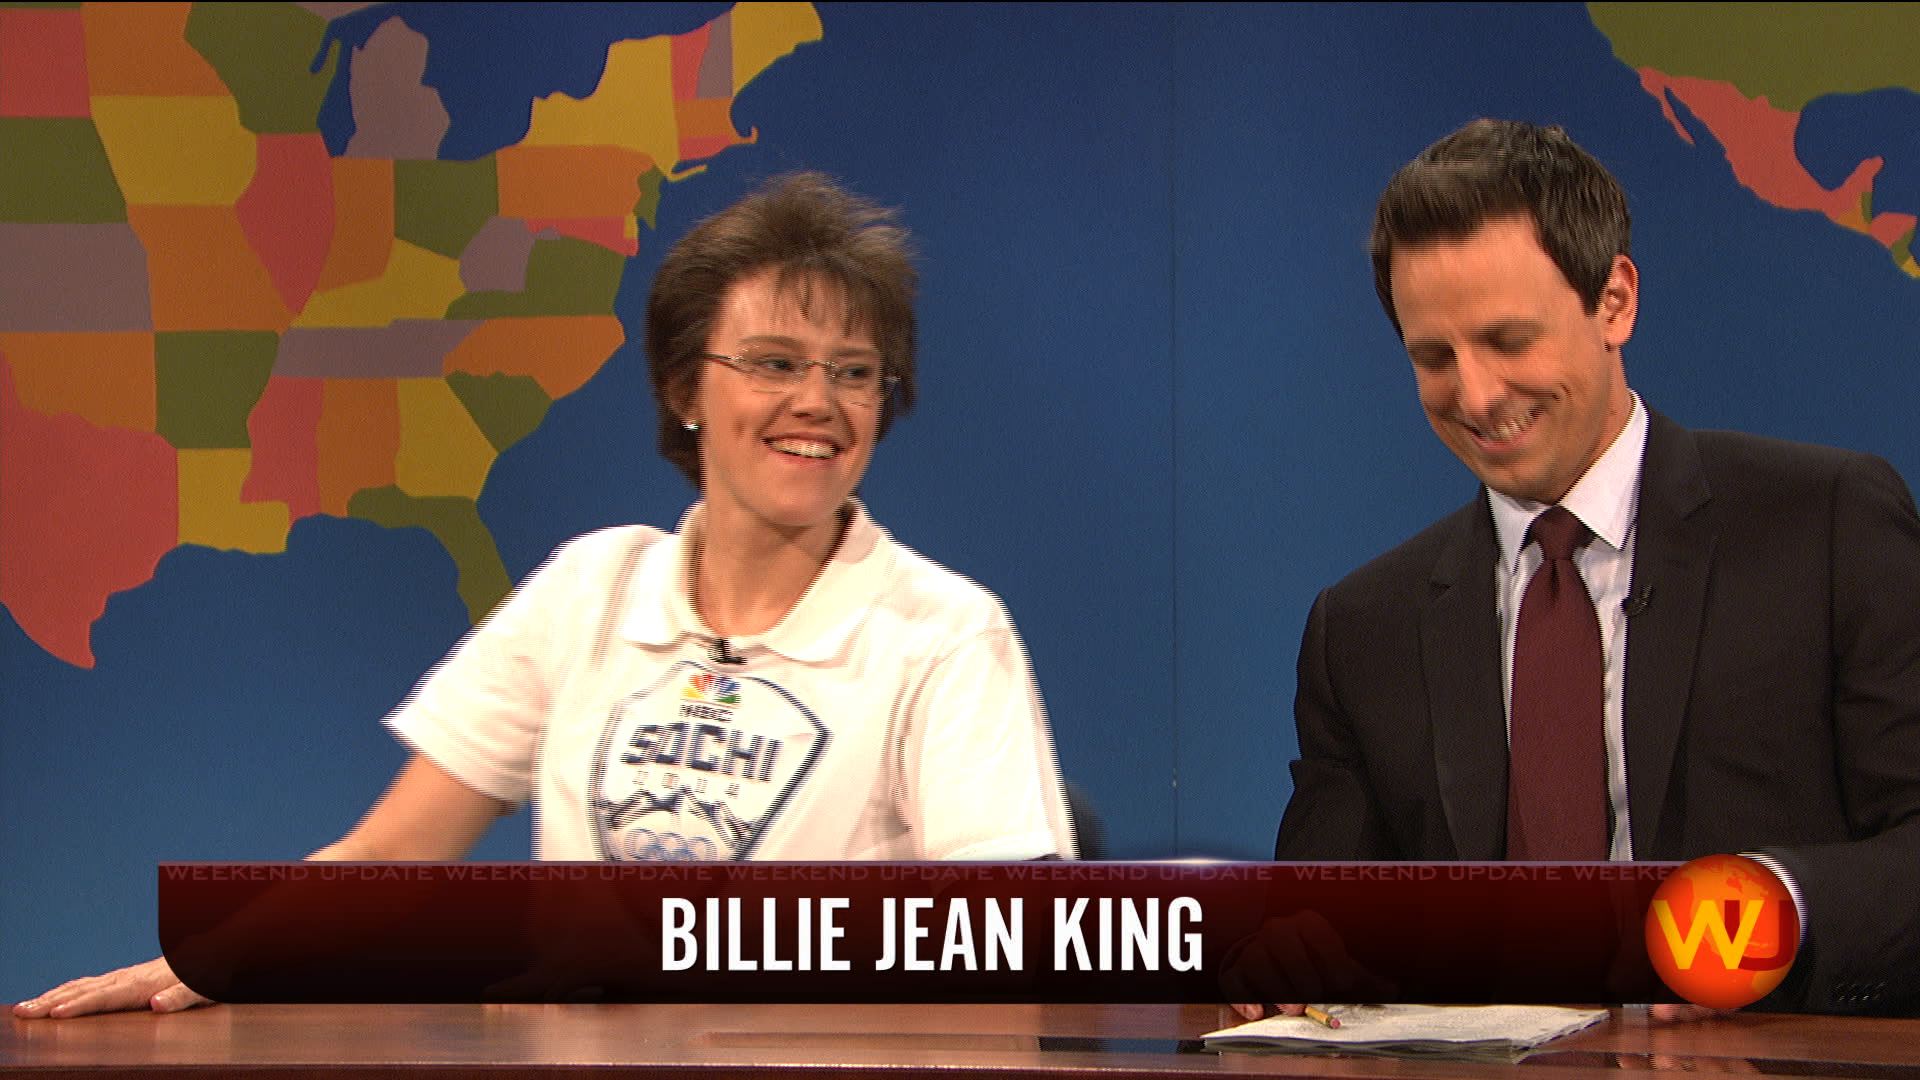 SNL Spoofs Billie Jean King as Obama's "Gay Middle Finger" 